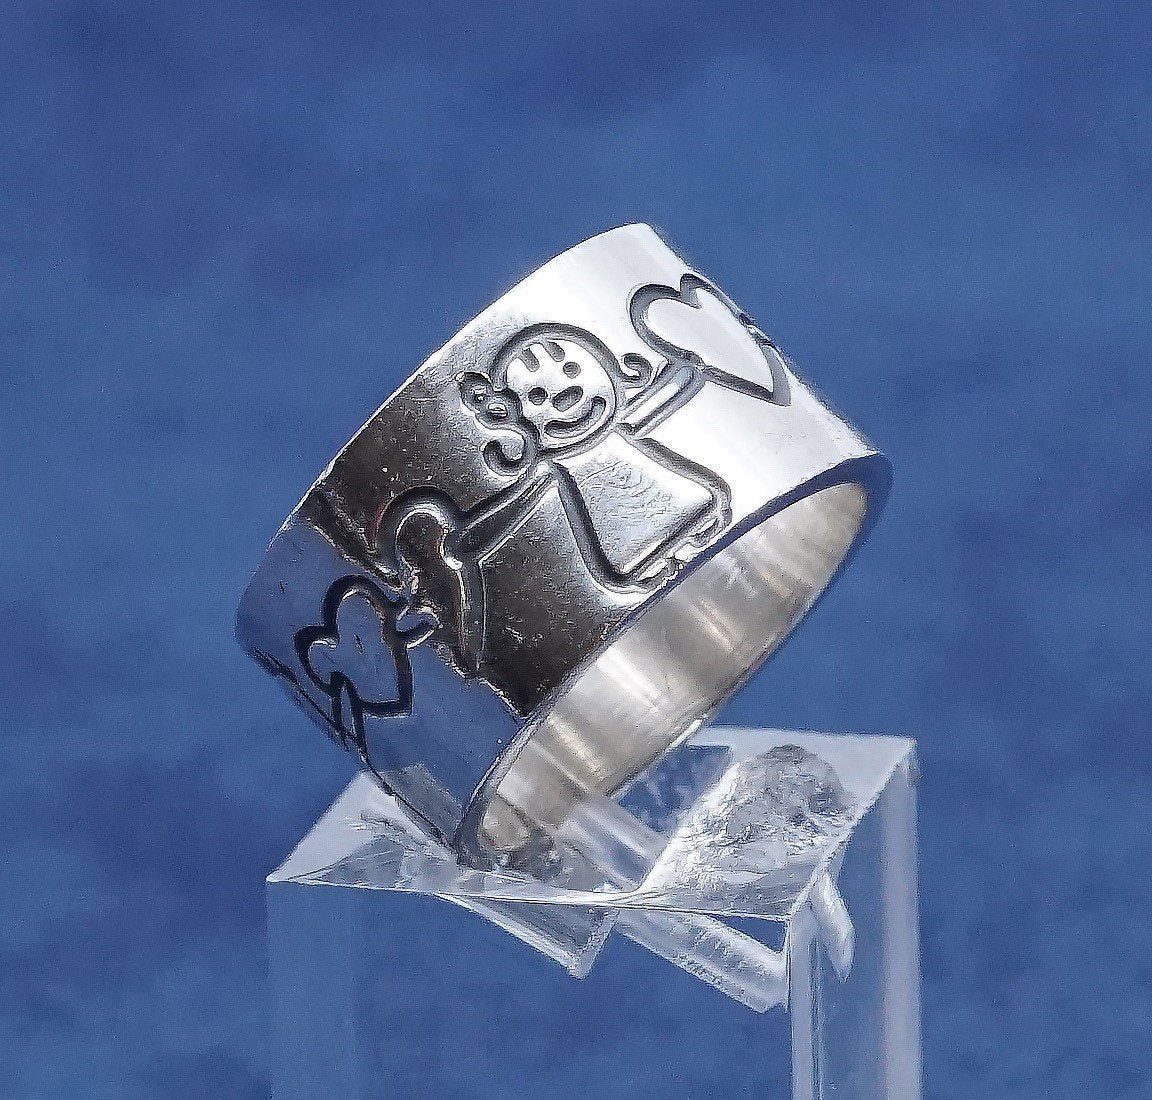 sz 6.5, vtg Sterling silver handmade ring, FAS 925 band engraved kids n heart